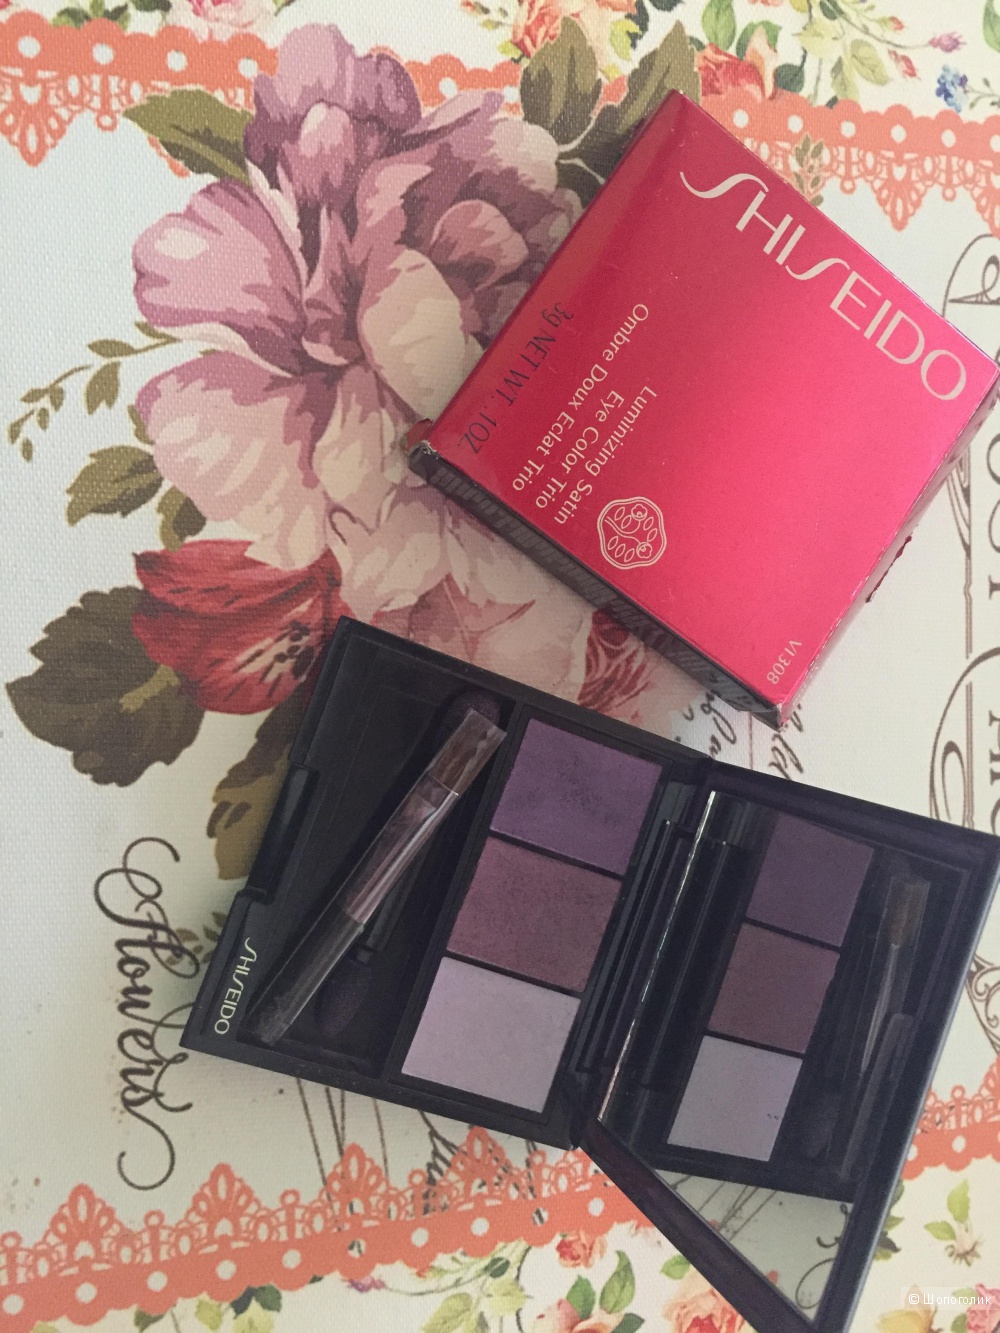 Две новых палетки трио-теней от Shiseido